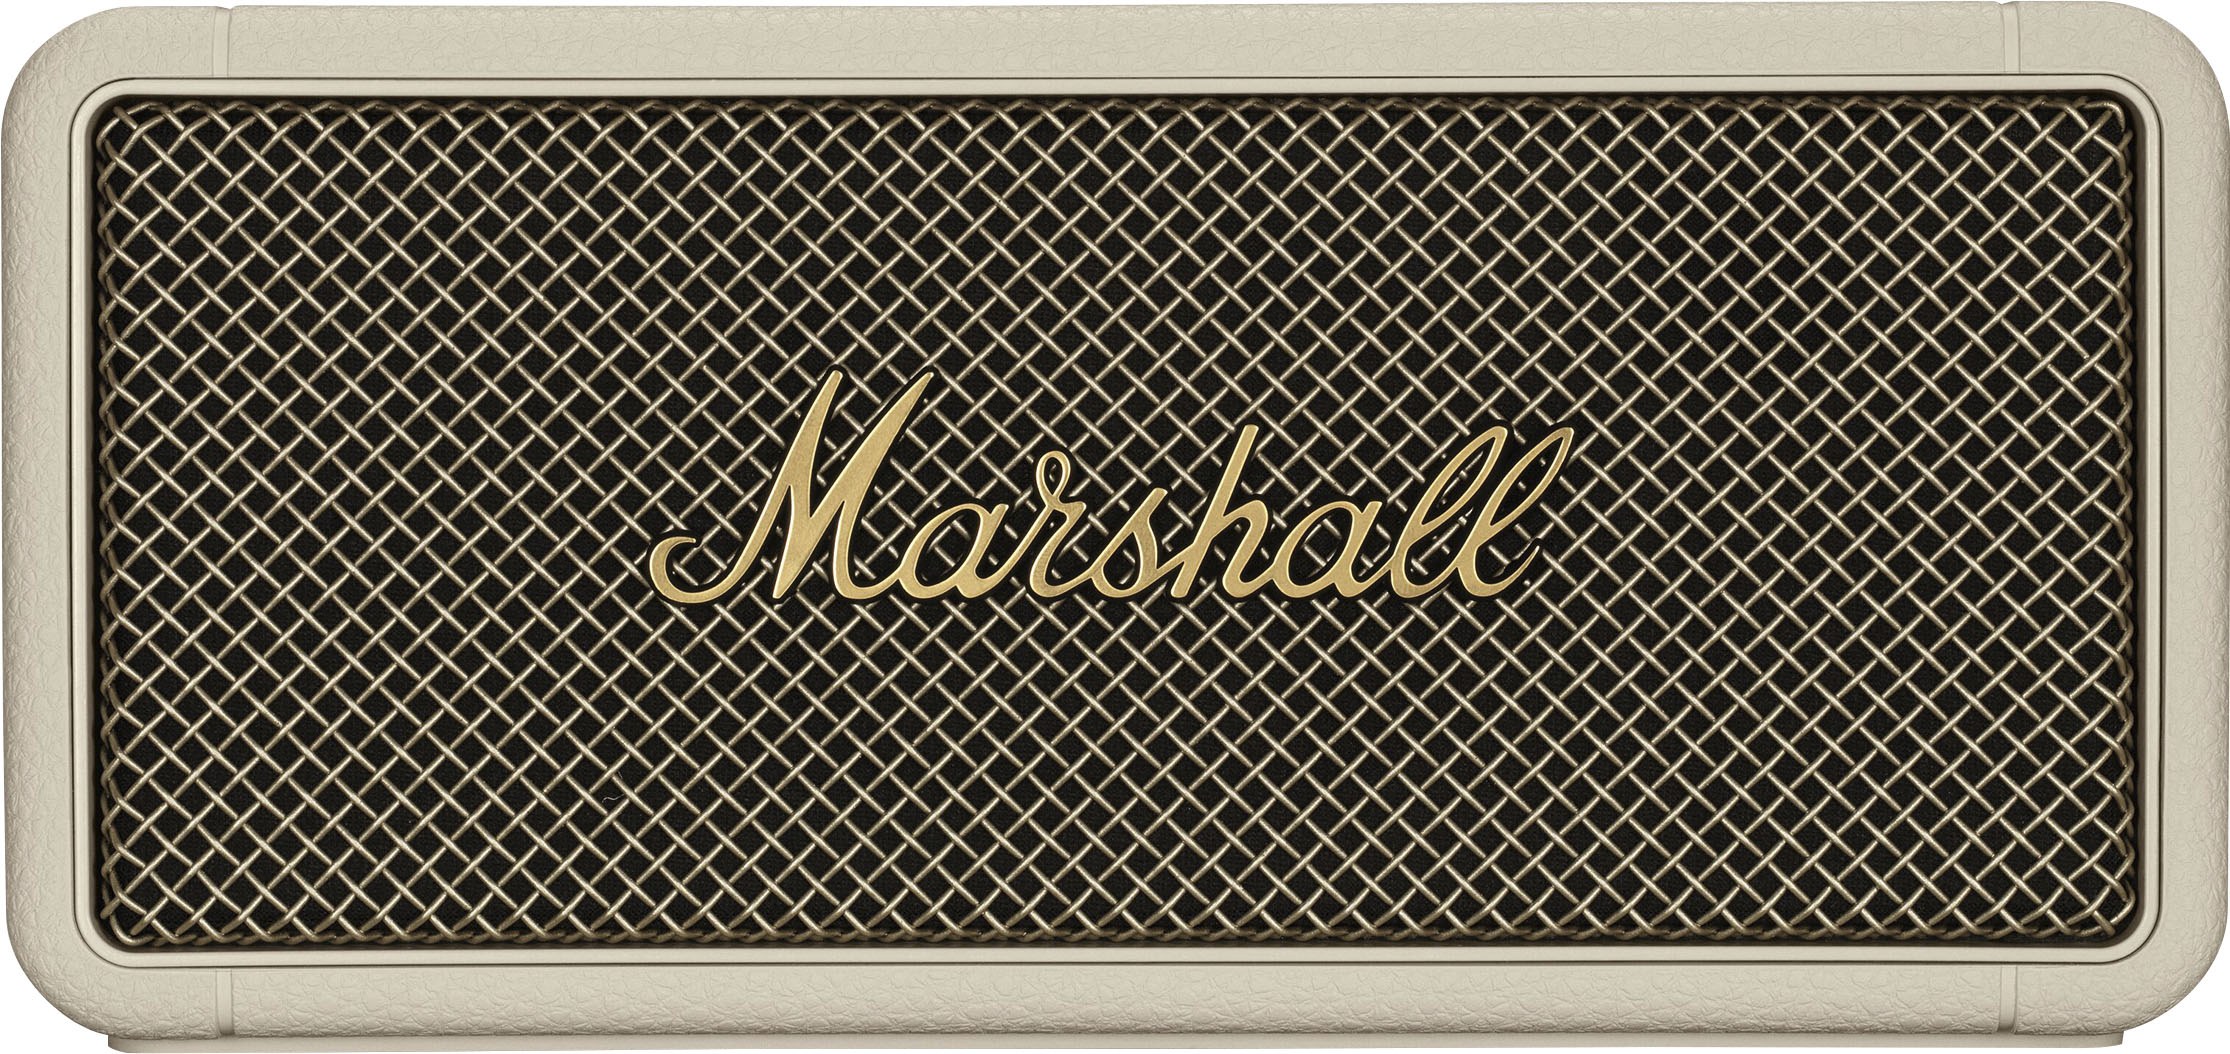 Marshall Willen - Enceinte Bluetooth - Crème